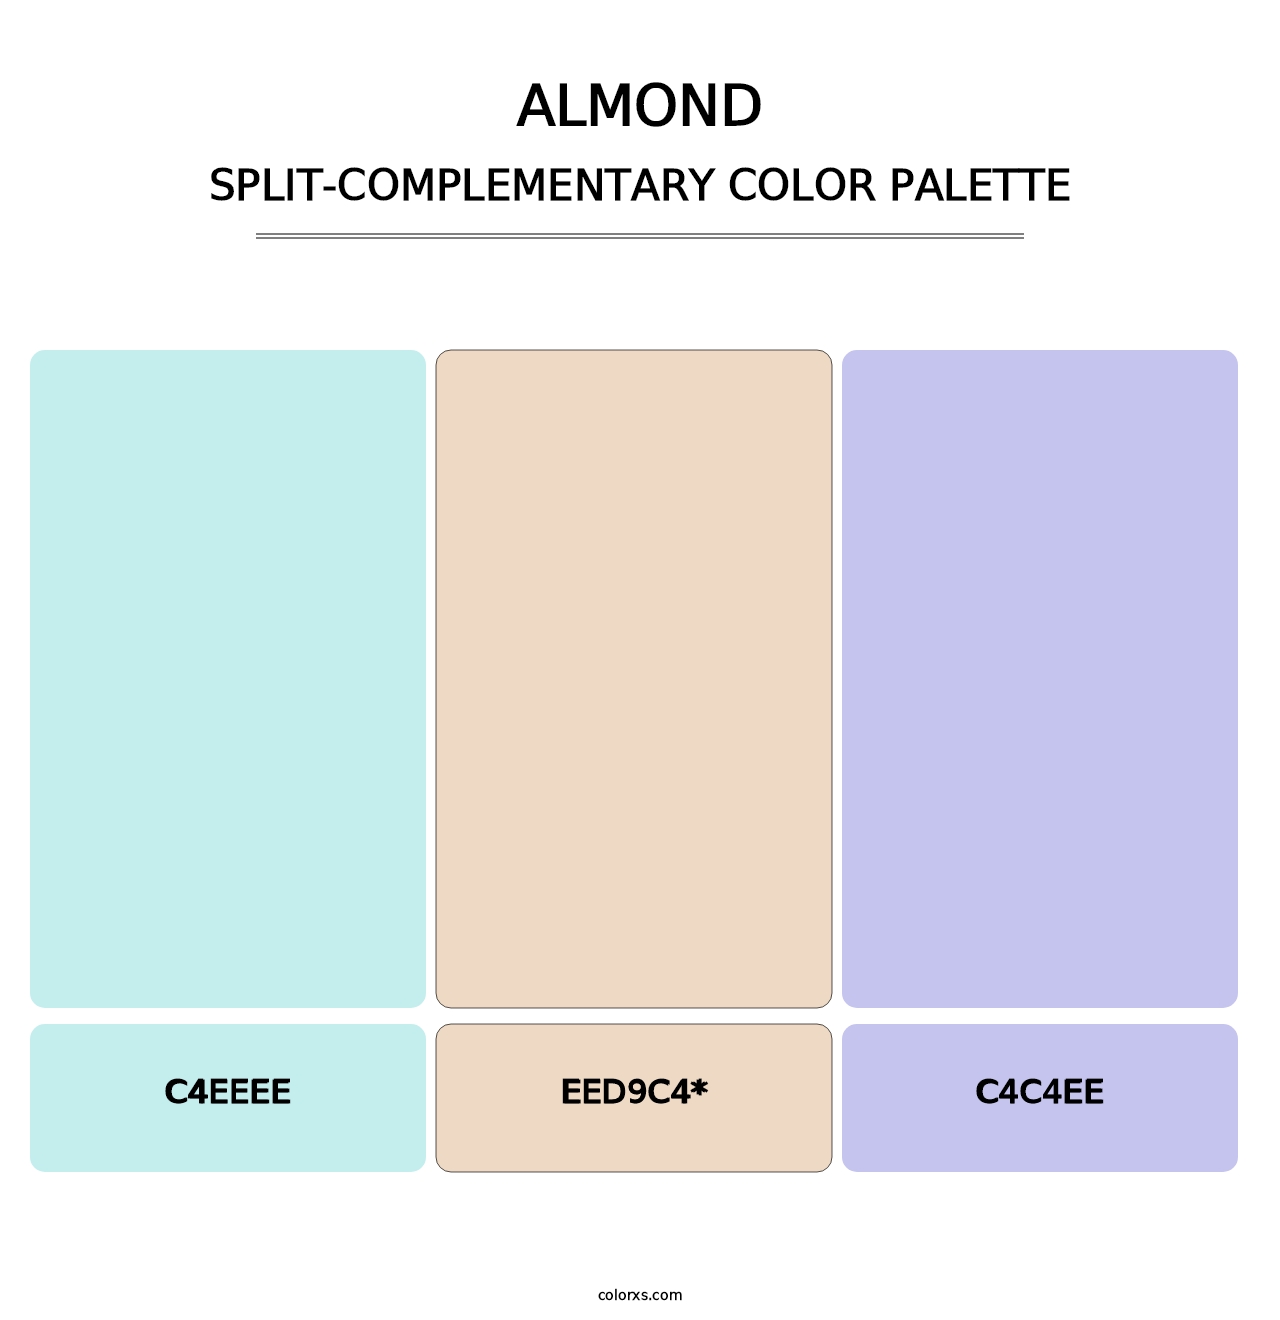 Almond - Split-Complementary Color Palette